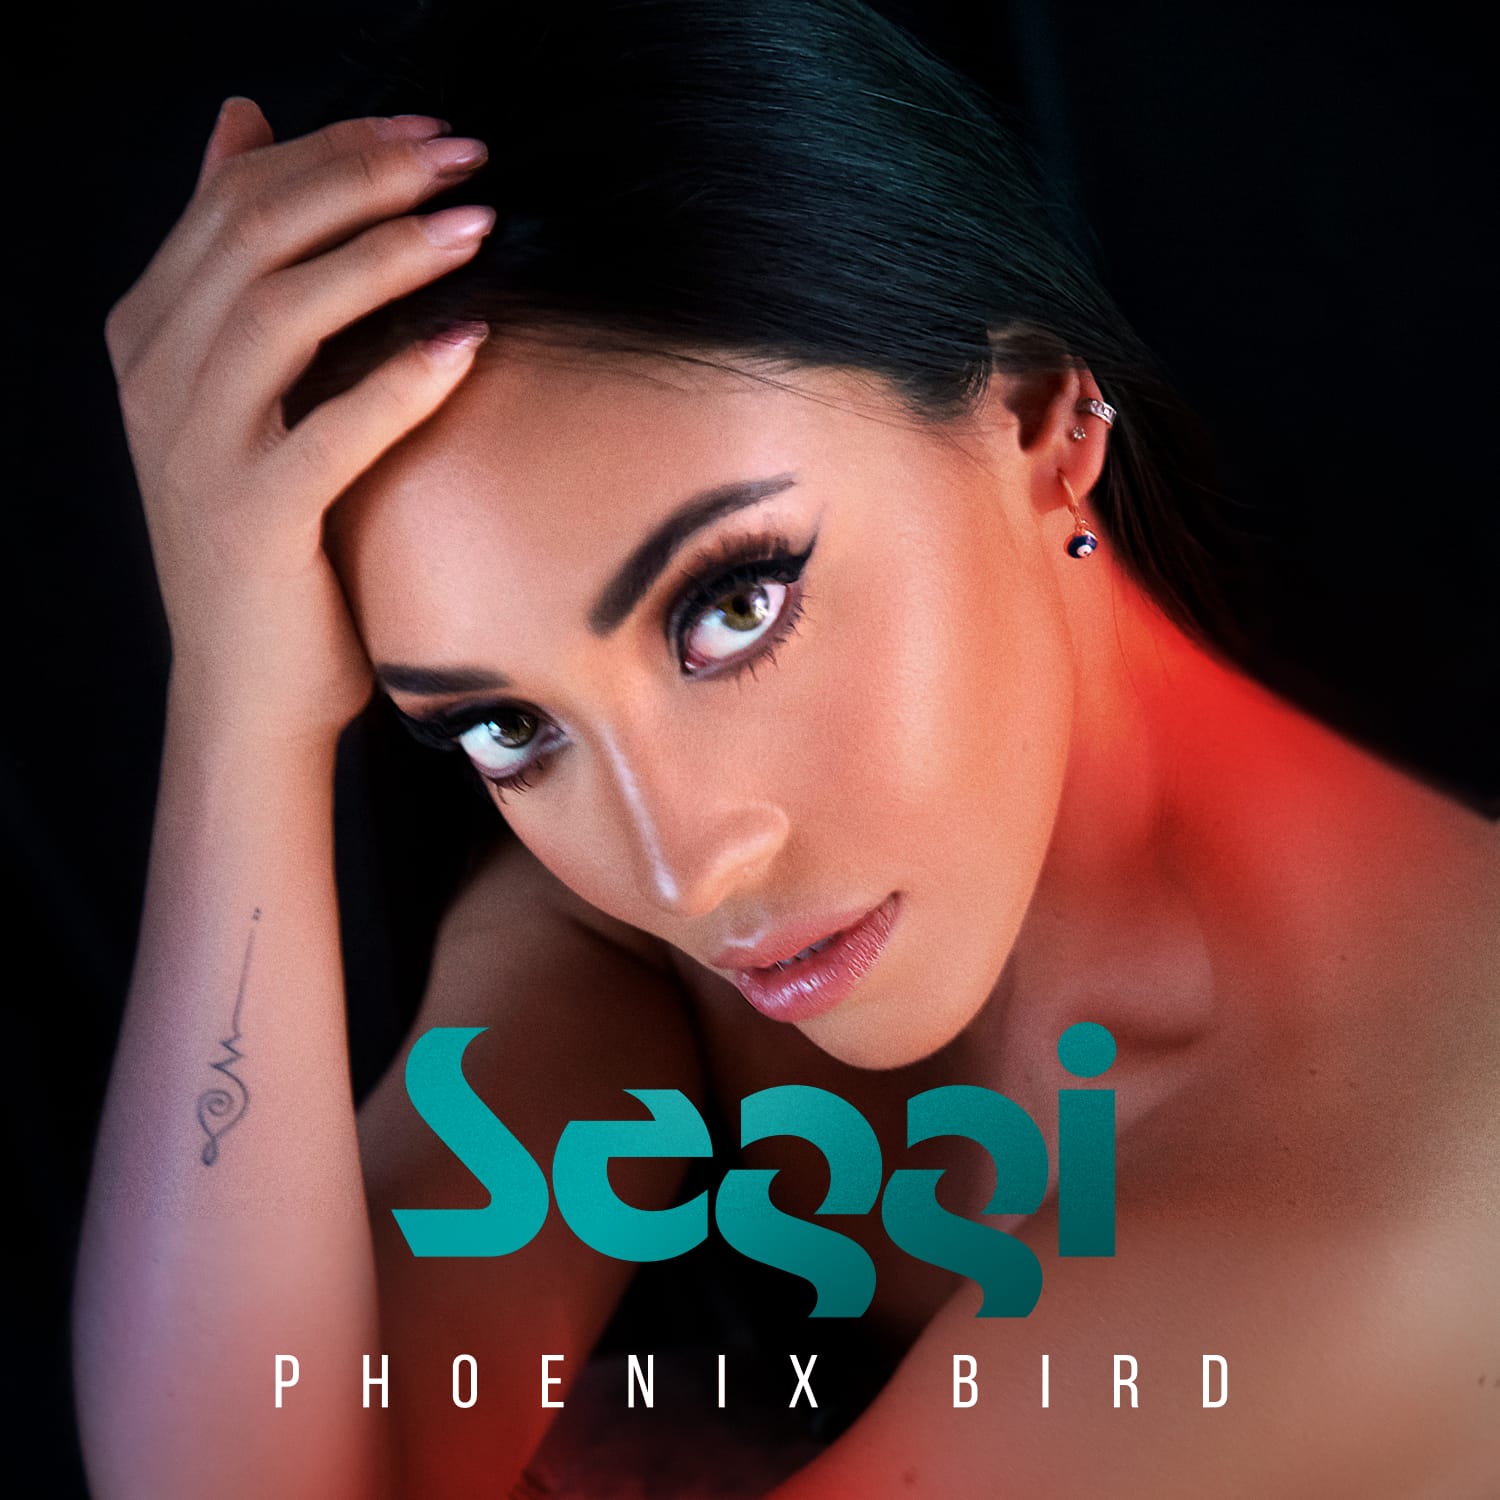 Seggi lanzó “Phoenix Band”, su segundo sencillo